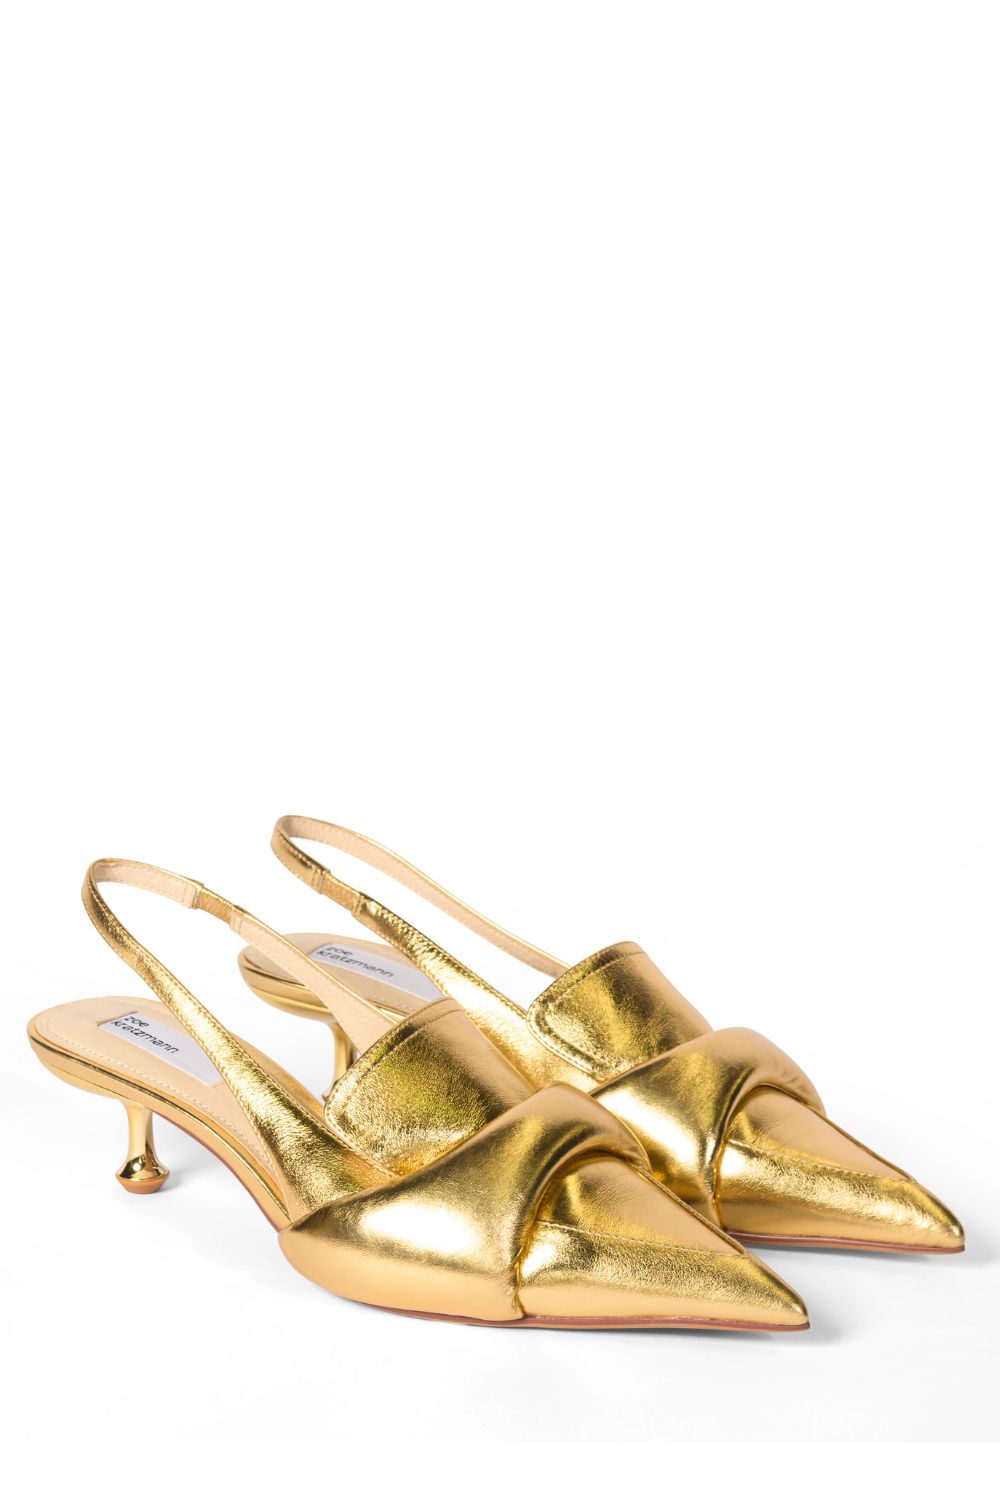 torpedo heel - gold